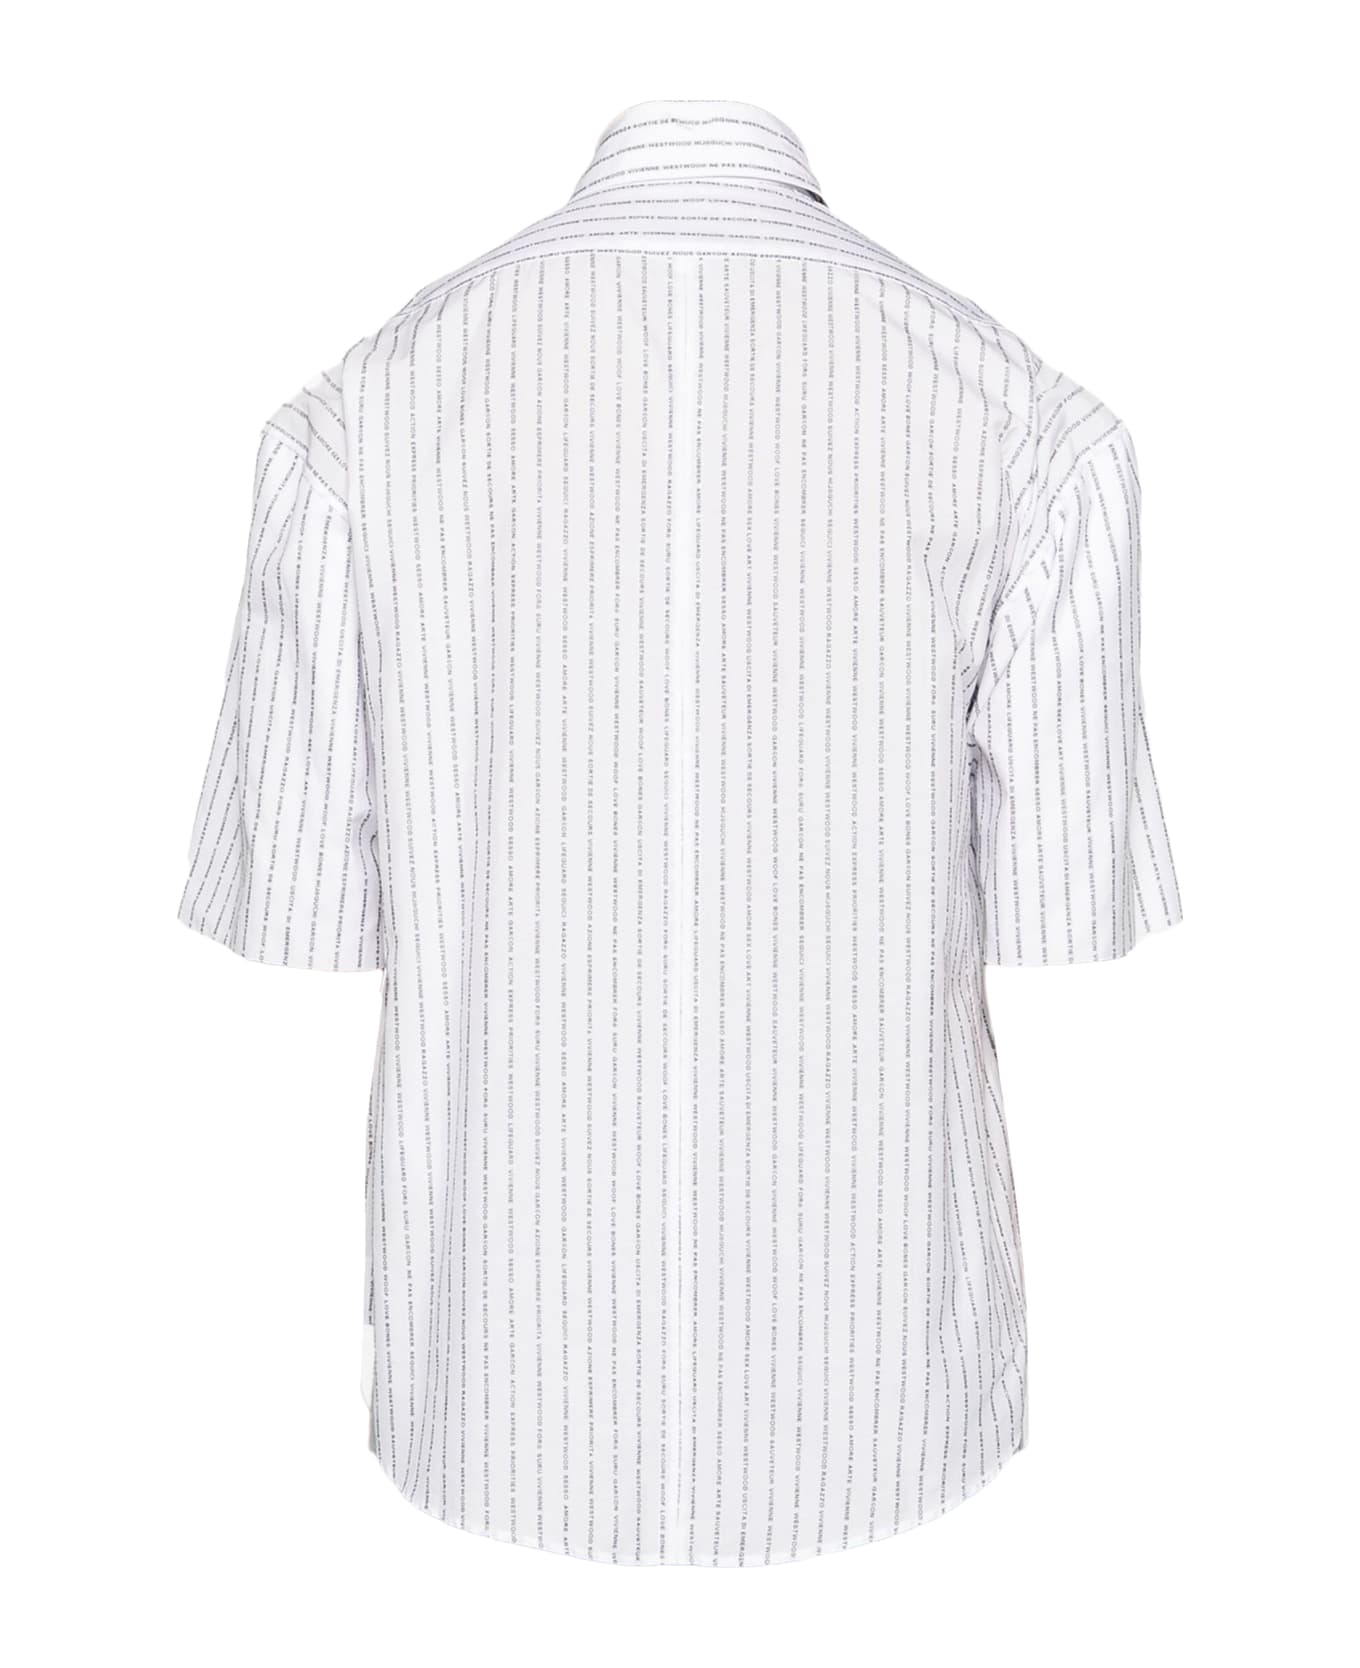 Vivienne Westwood Shirts White - White